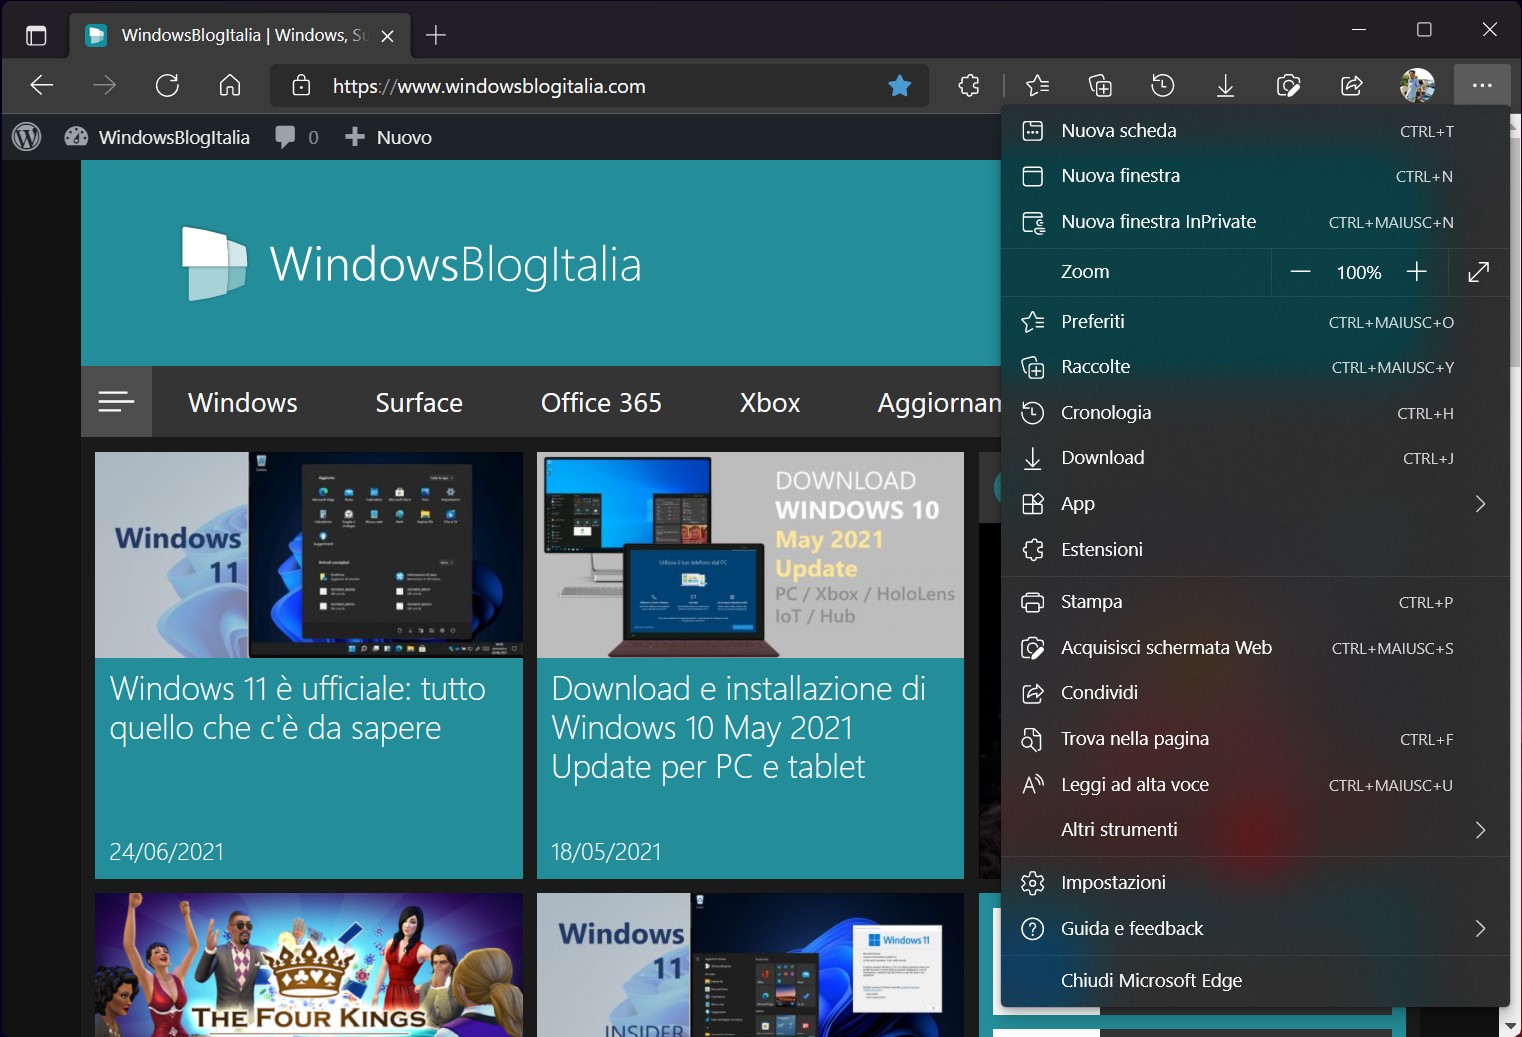 Microsoft Edge Canary - Enable Windows 11 Visual Updates - Nuovo design menu semitrasparente